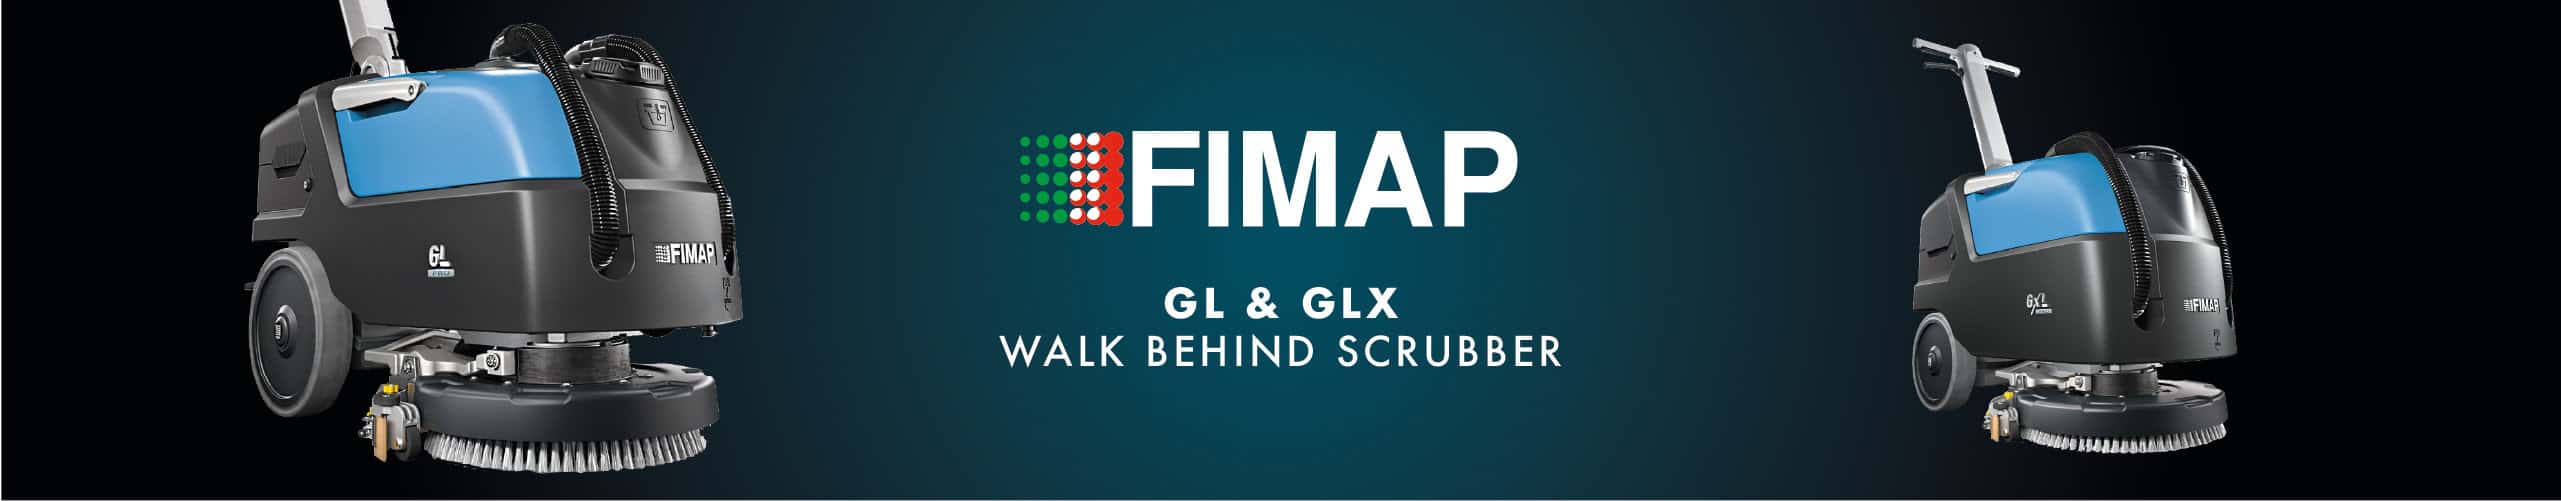 Small FIMAP Banner